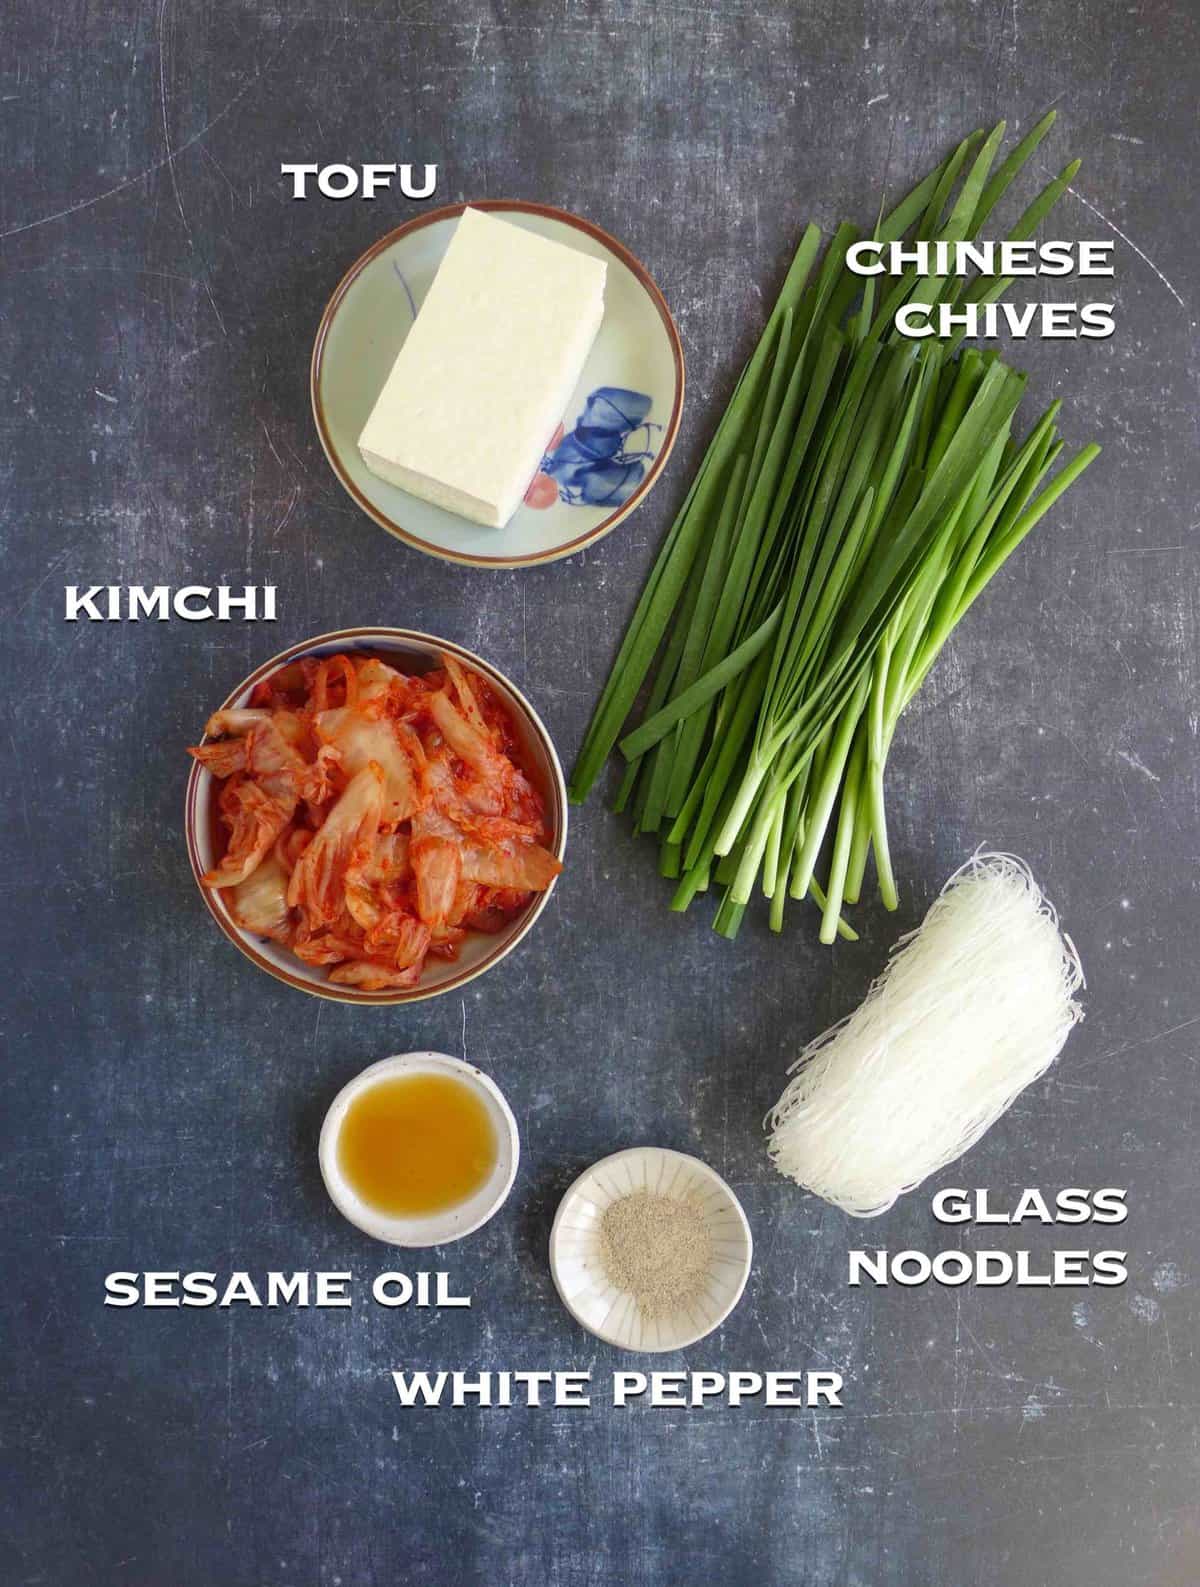 ingredients for making kimchi dumplings.